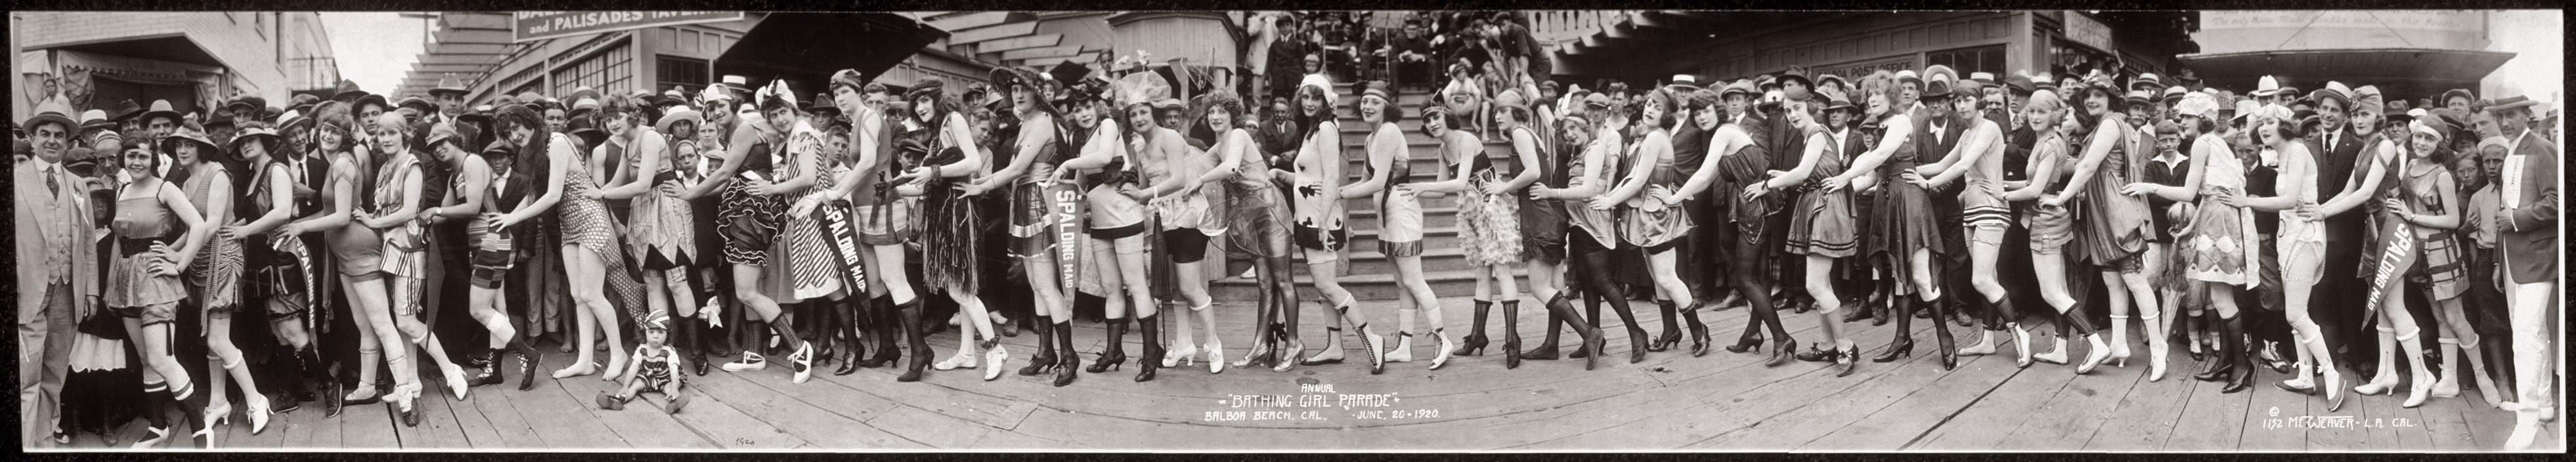 
Annual "Bathing Girl Parade," Balboa Island at Newport Beach, California. June 20, 1920. Panoramic photo by Miles Weaver. View full size.